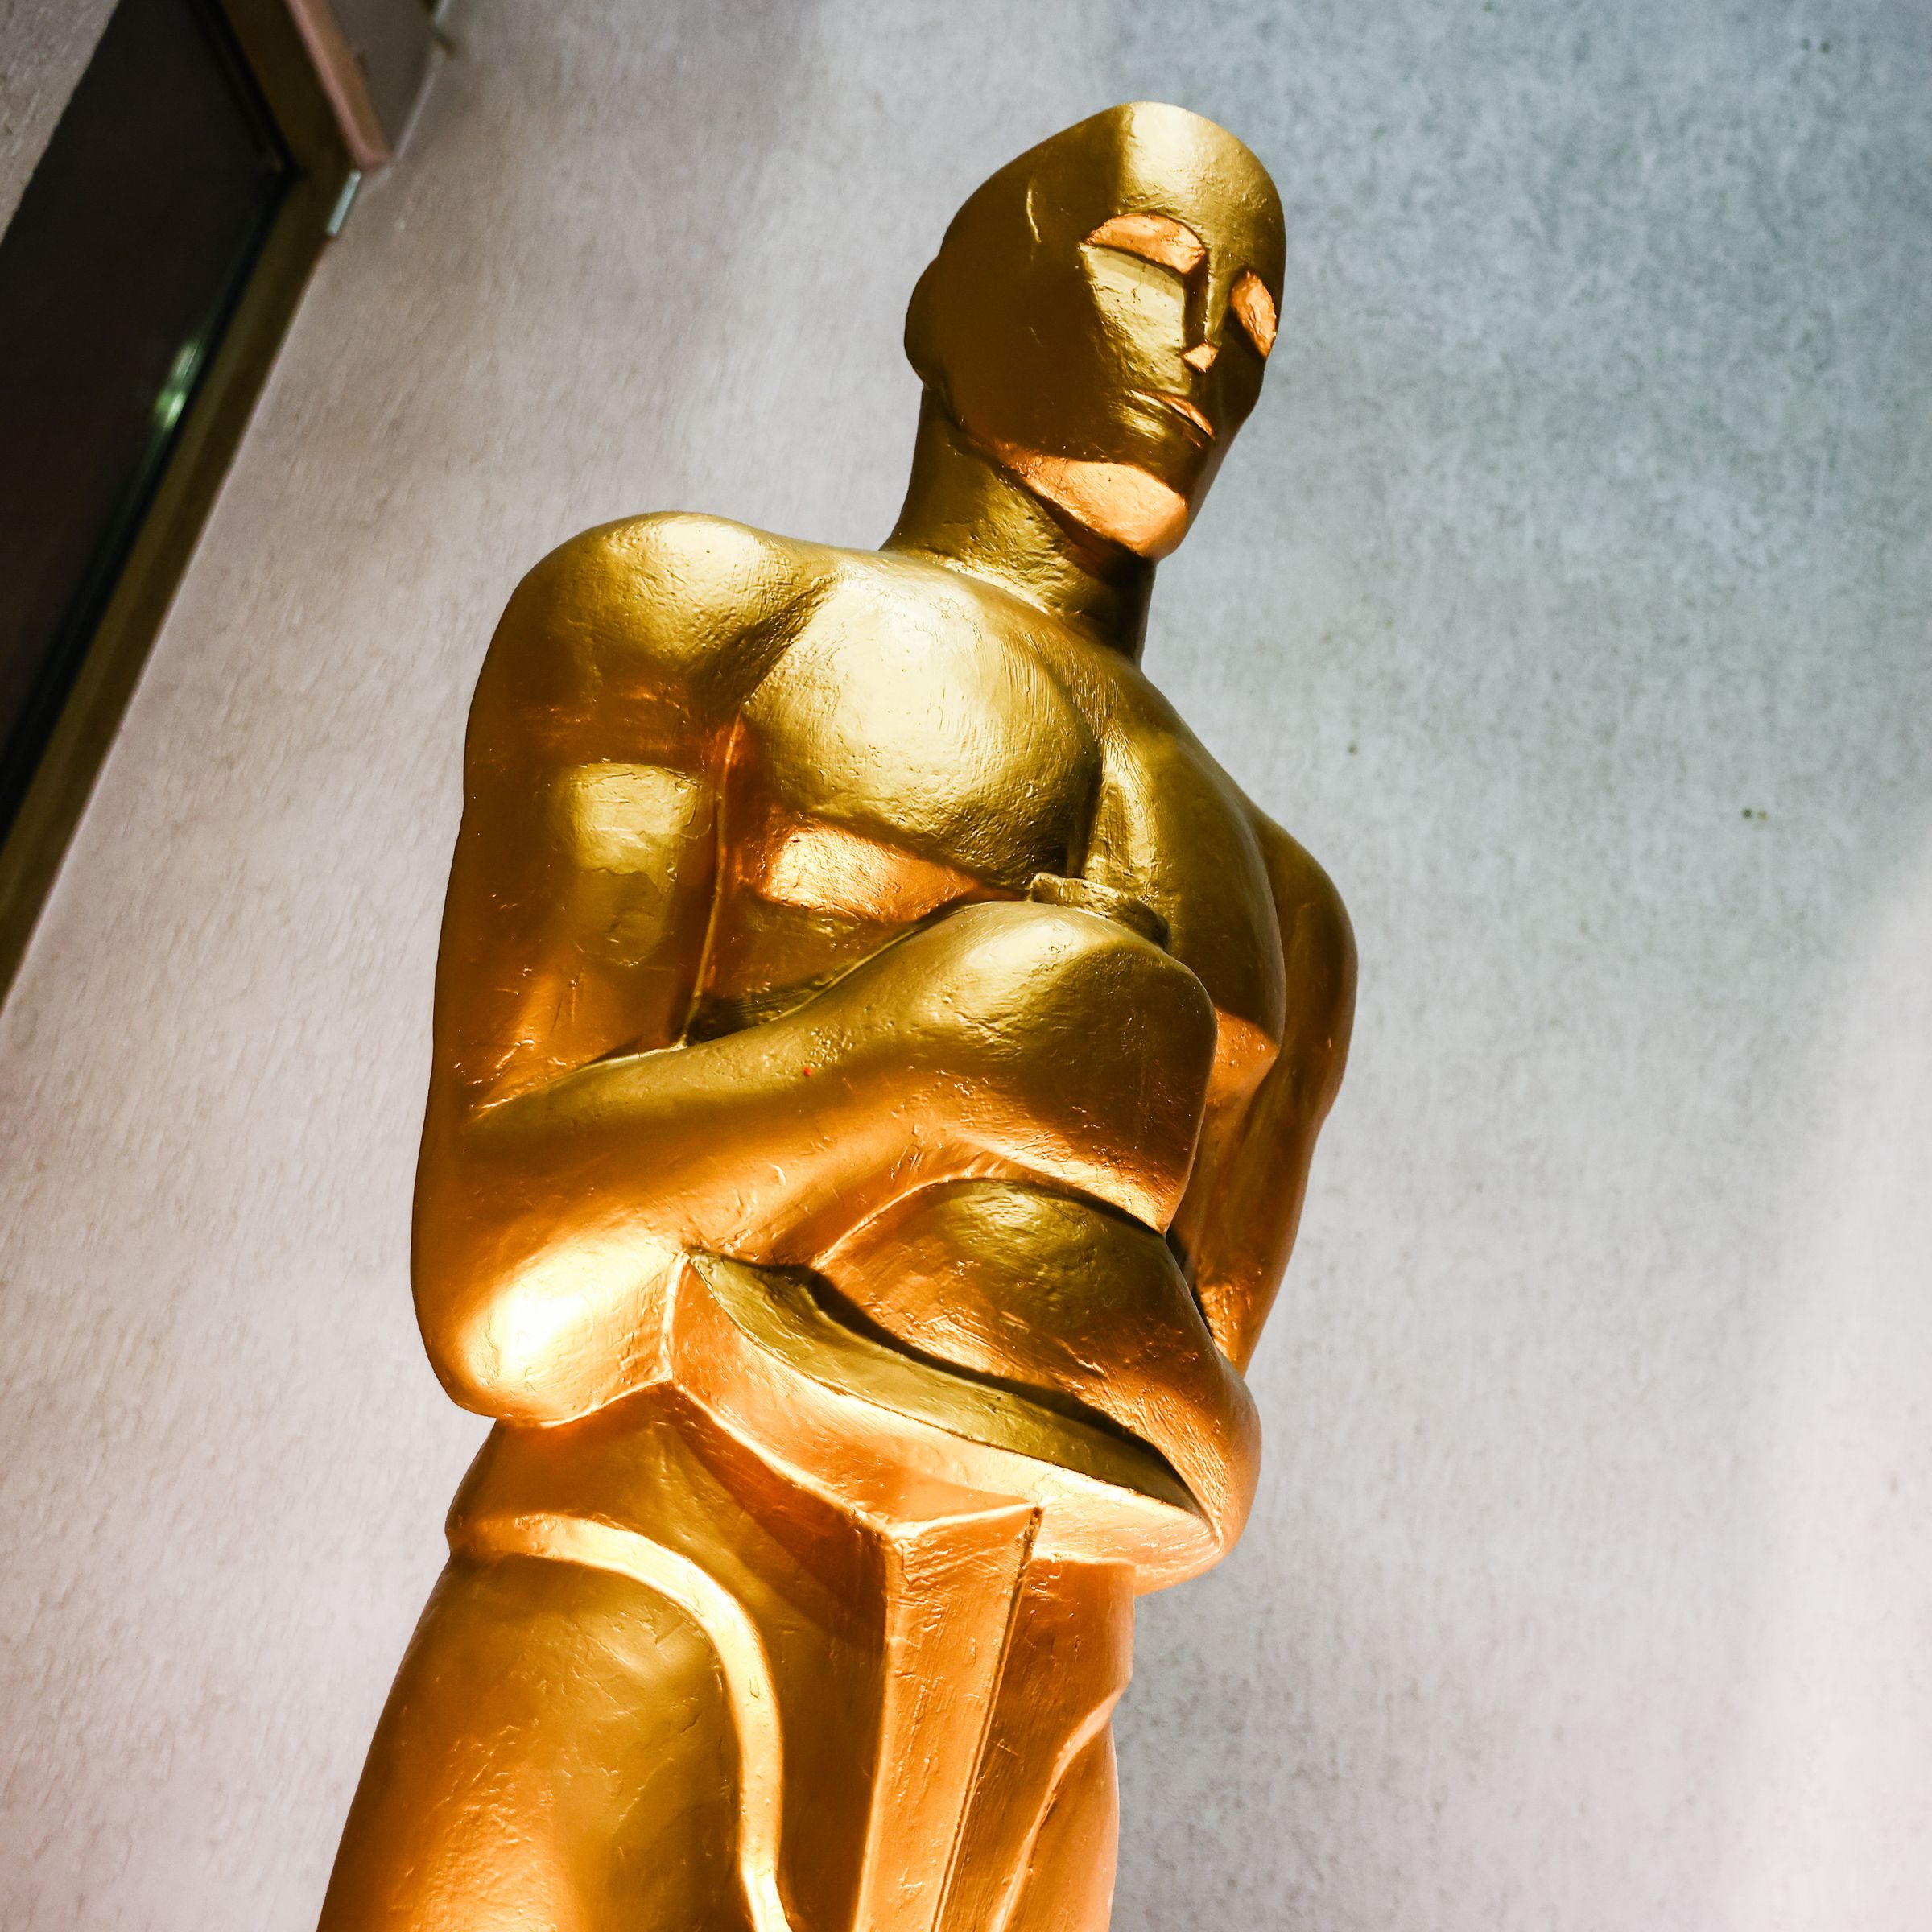 An image showing an Oscar award statue 